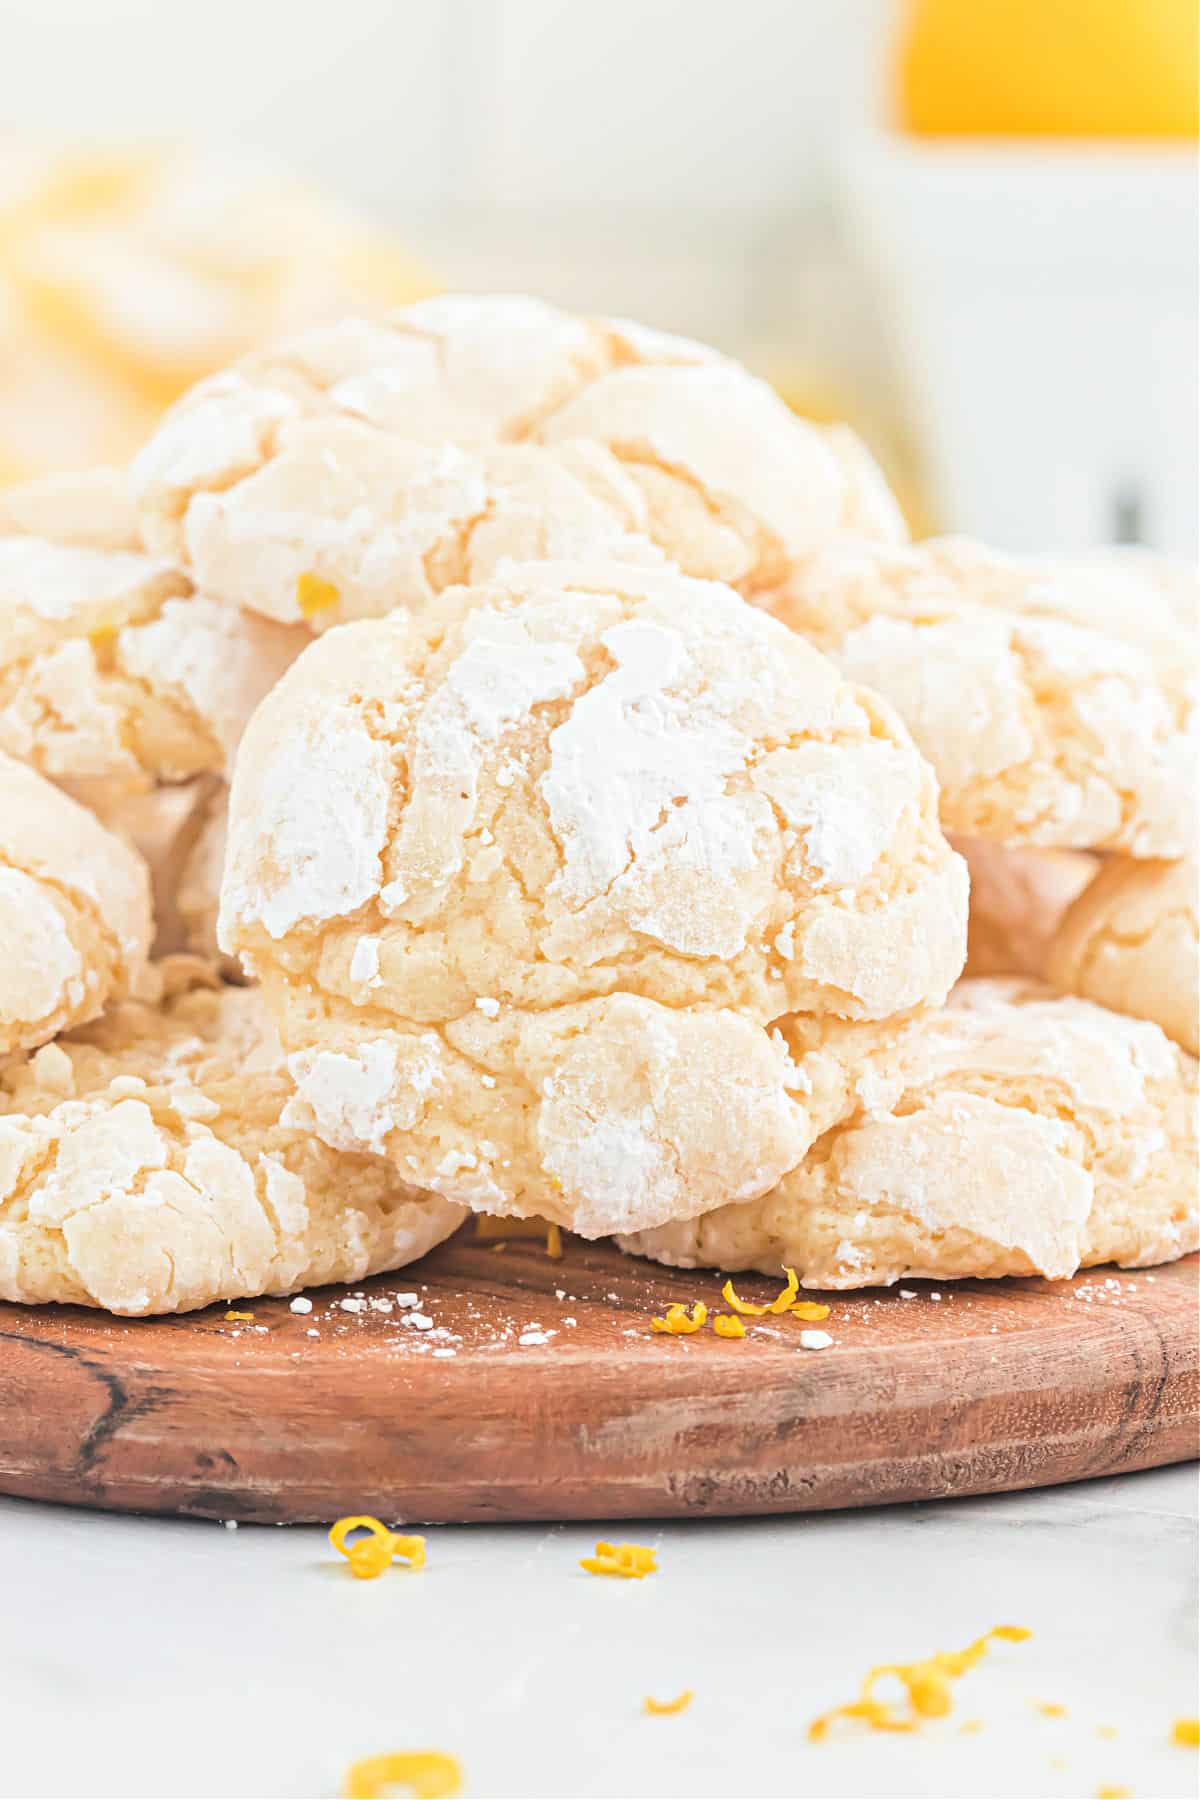 https://www.shugarysweets.com/wp-content/uploads/2019/02/lemon-gooey-butter-cookies-plated.jpg